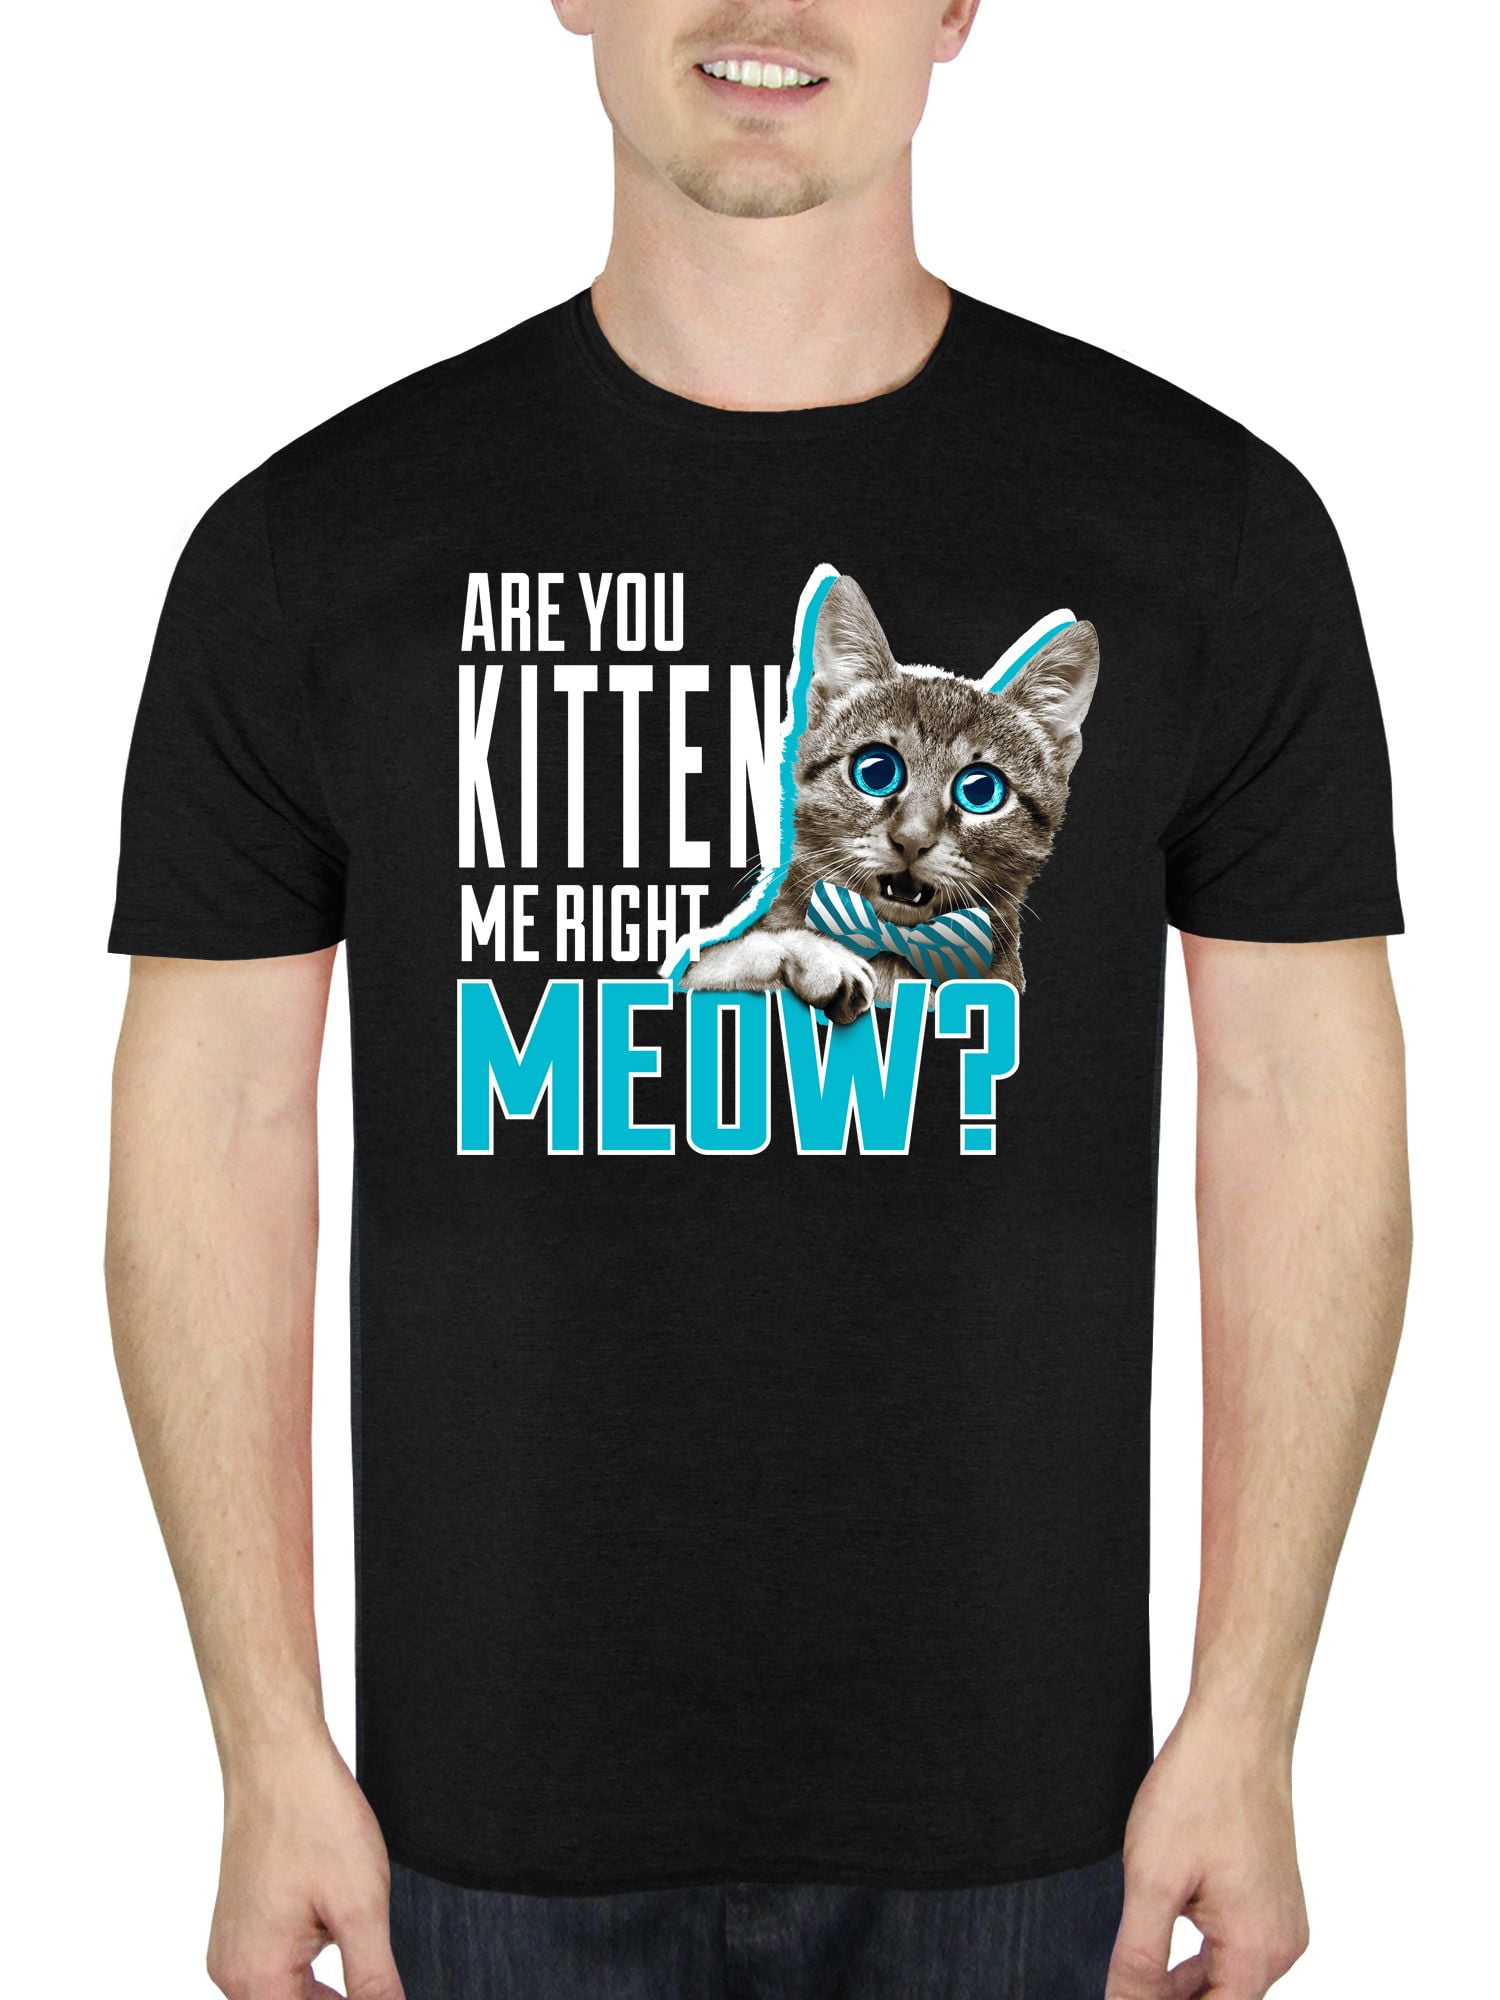 Are You Kitten Me T shirt Funny Cat Meow Animal Pet Girl Fashion Tee Womens S-XL 